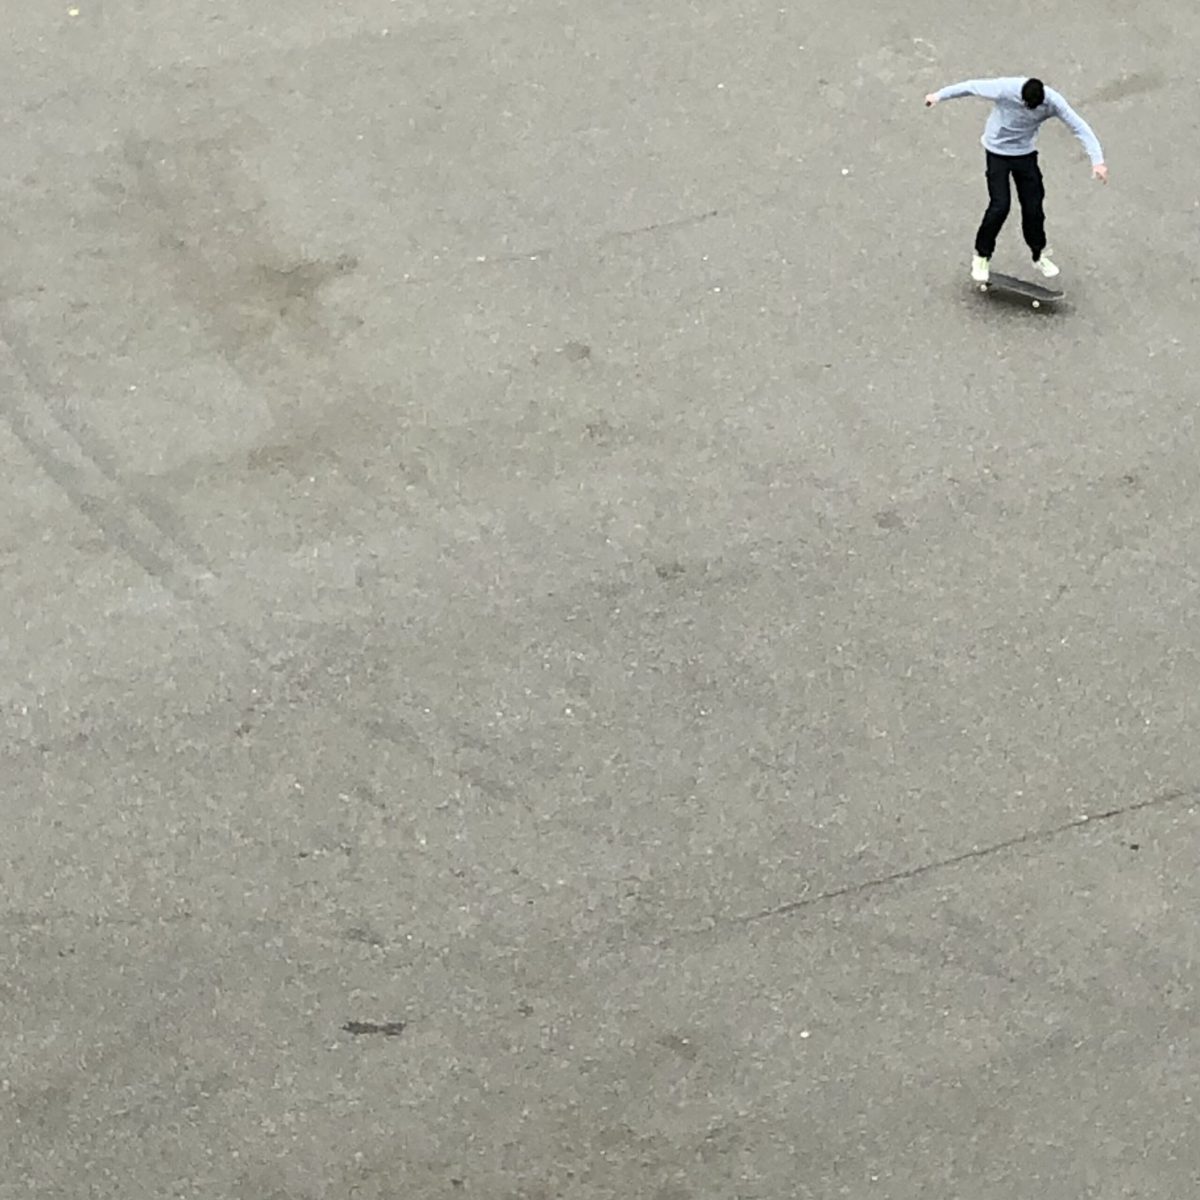 Skatboarder